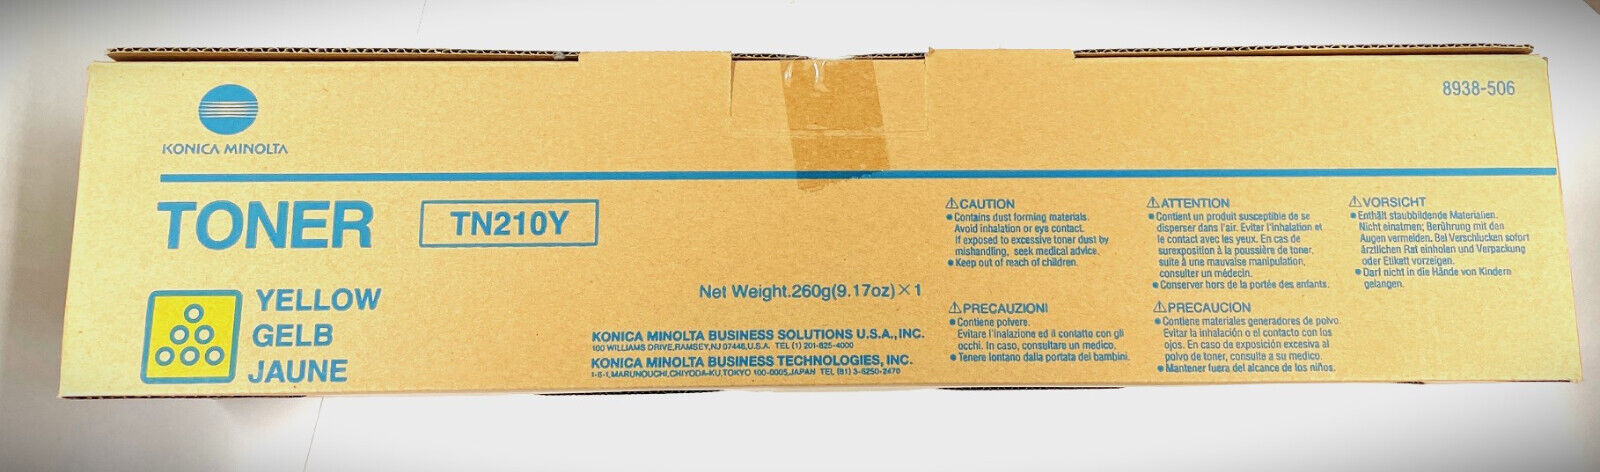 Konica Minolta TN210 8938-506 Yellow Toner Cartridge For Bizhub C250 C252 NEW